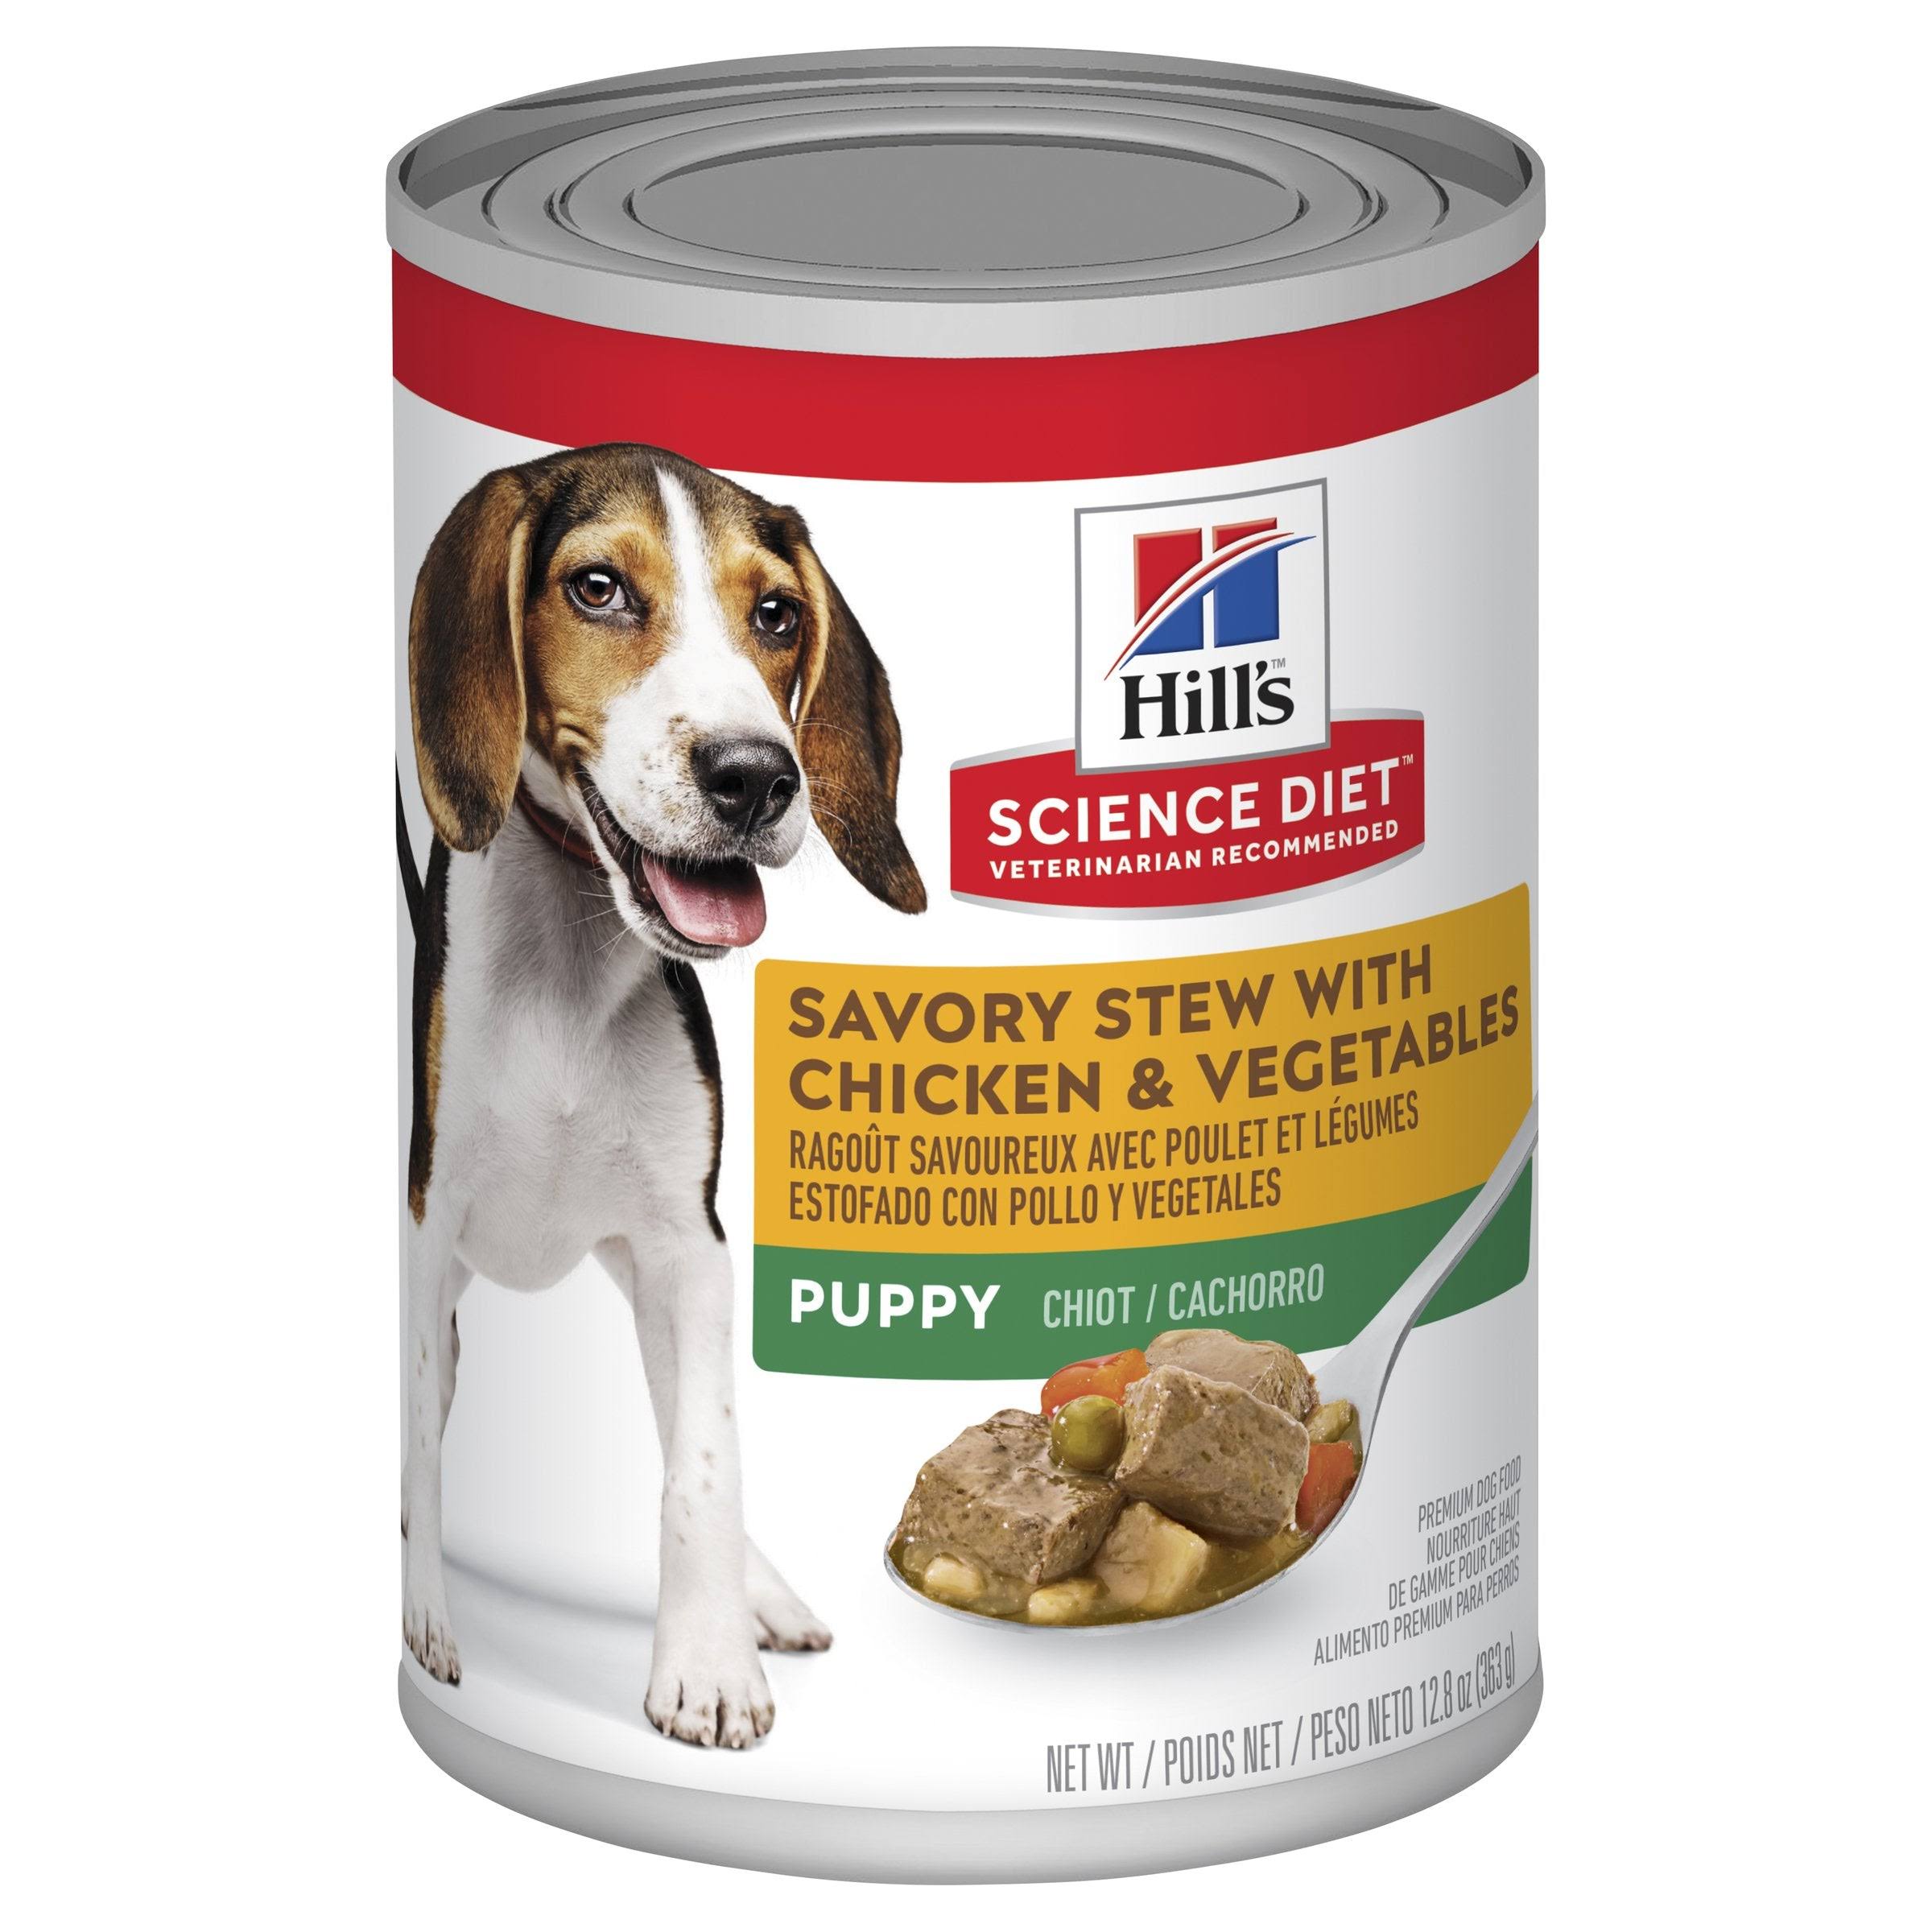 Hill's Science Diet Savory Stew with Chicken & Vegetables Premium Dog Food